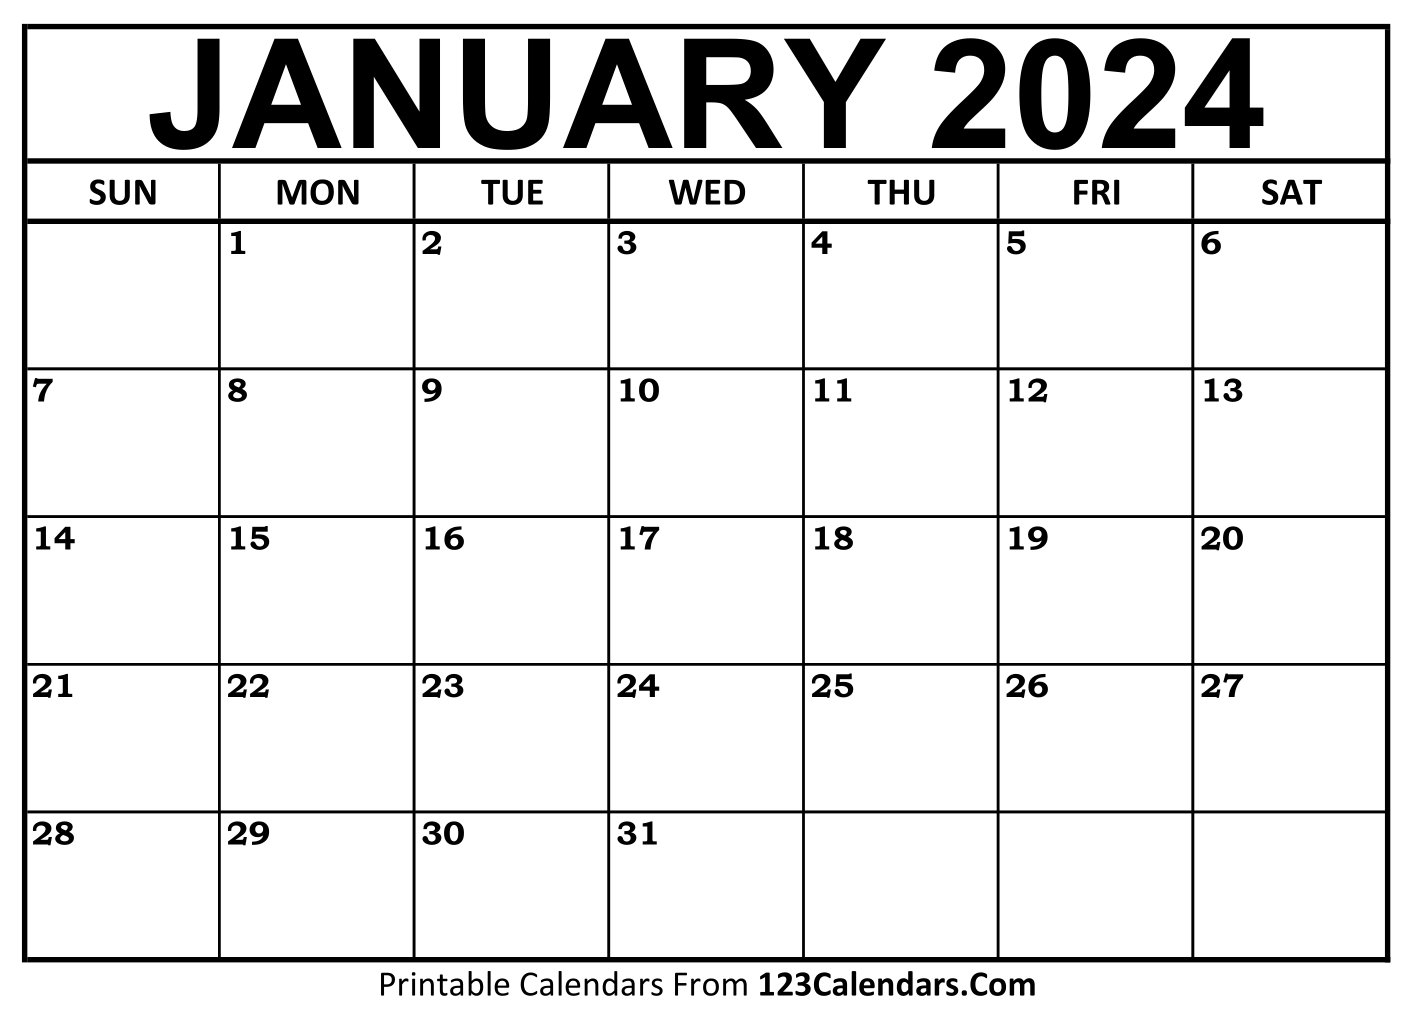 Printable January 2024 Calendar Templates - 123Calendars for Printable Calendar January 2024 Wiki